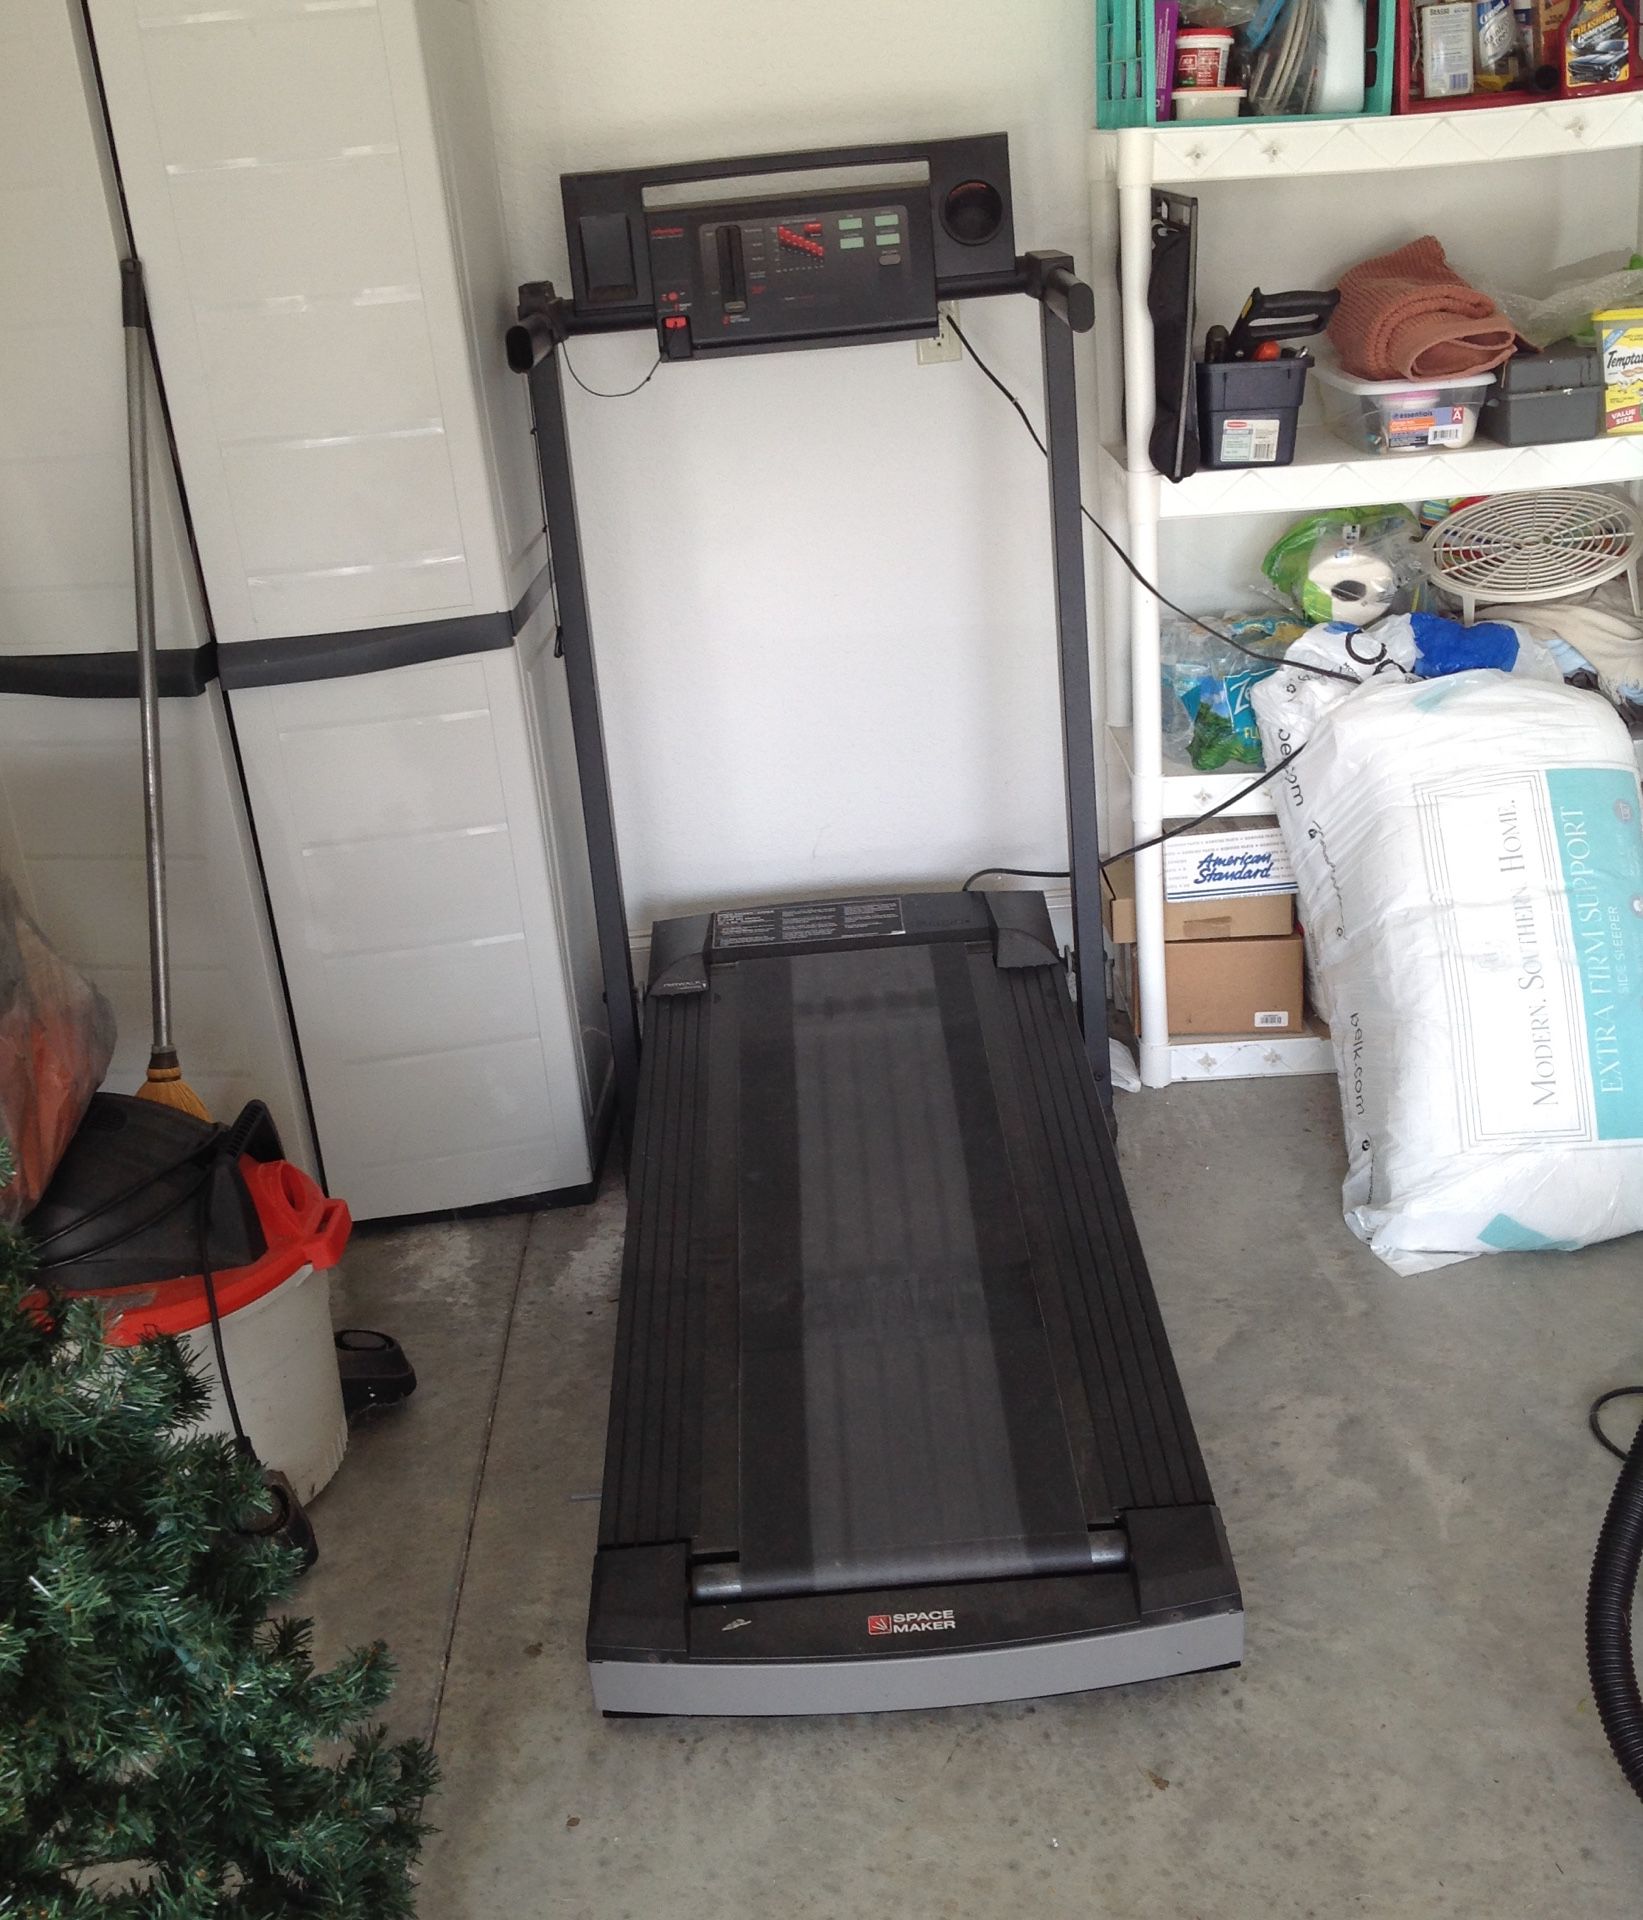 Sears brand treadmill